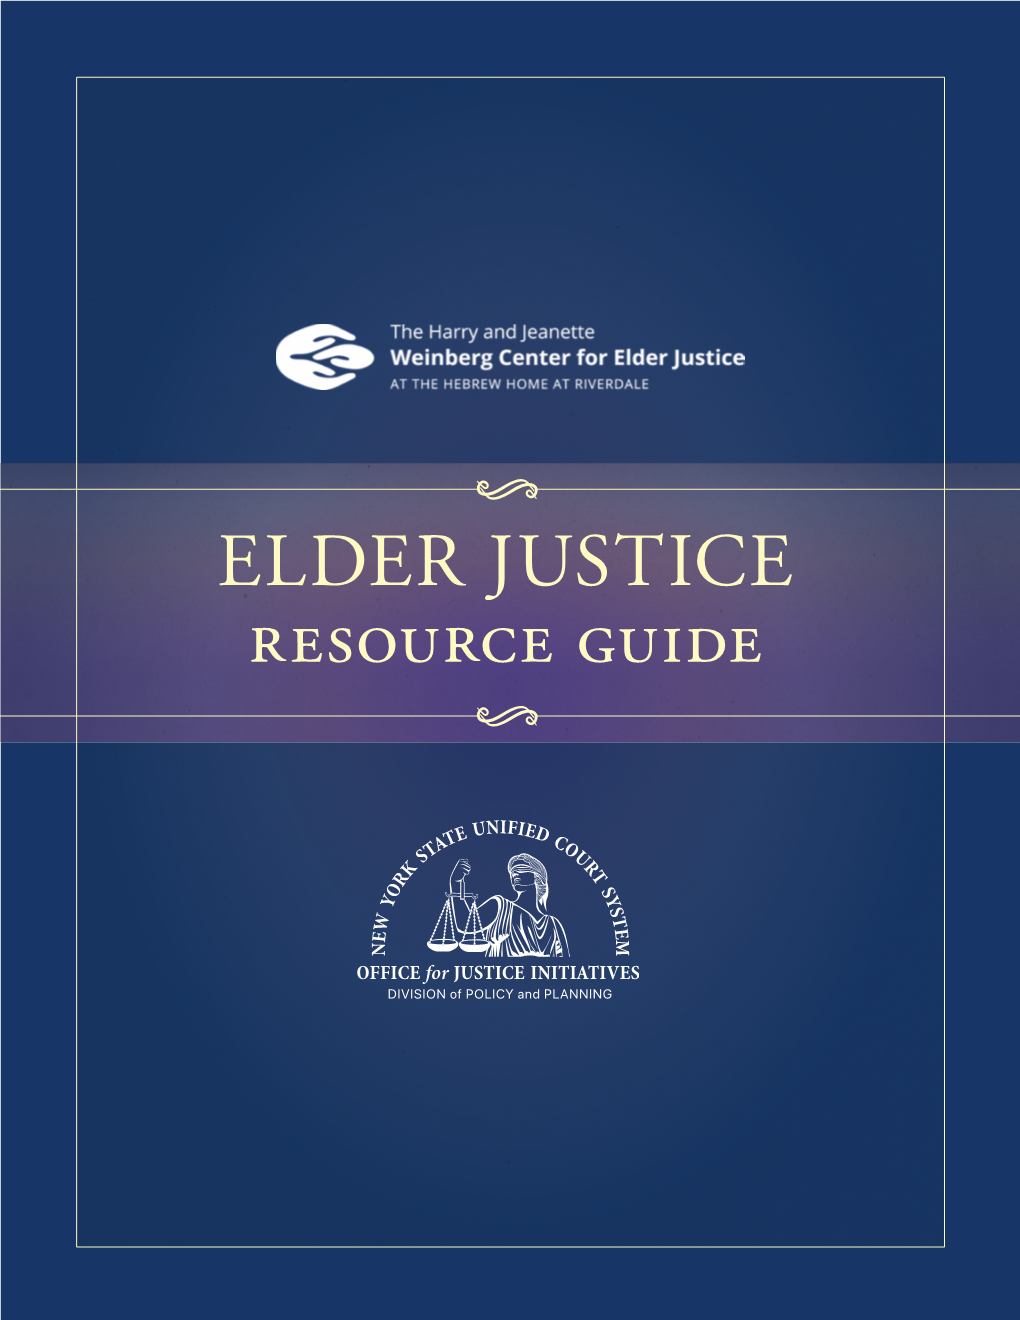 ELDER JUSTICE Resource Guide